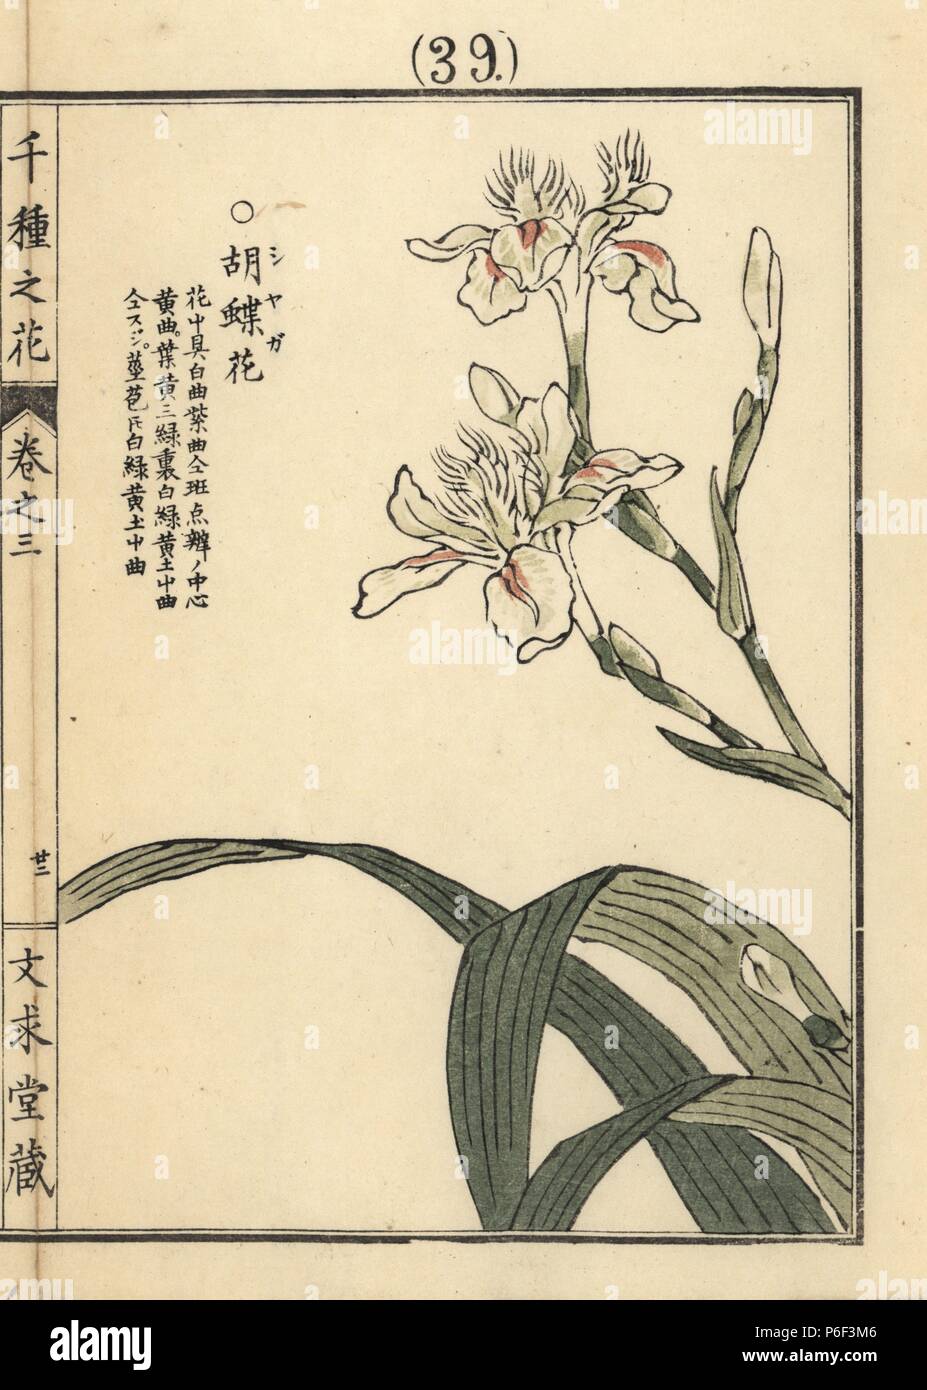 Shaga, fringed or crested iris, Iris japonica. Handcoloured woodblock print by Kono Bairei from Senshu no Hana (One Thousand Varieties of Flowers), Bunkyudo, Kyoto, 1889. Stock Photo